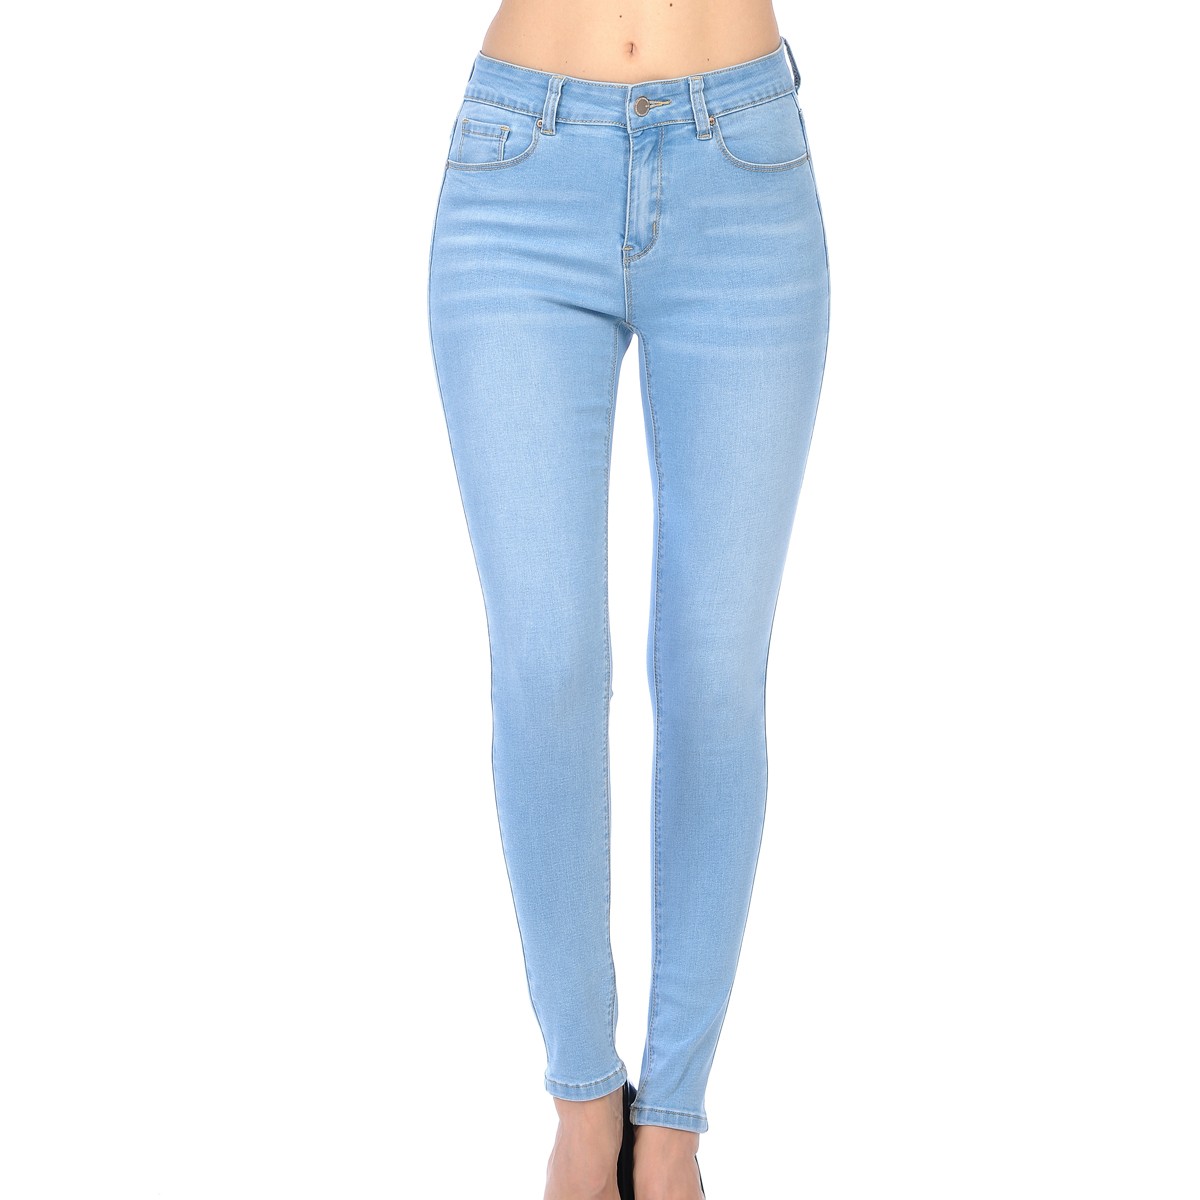 Wax Jeans Womens High Rise Classic 5 Pocket Skinny Jean w/ True Stretch LIGHT-0 - image 1 of 3